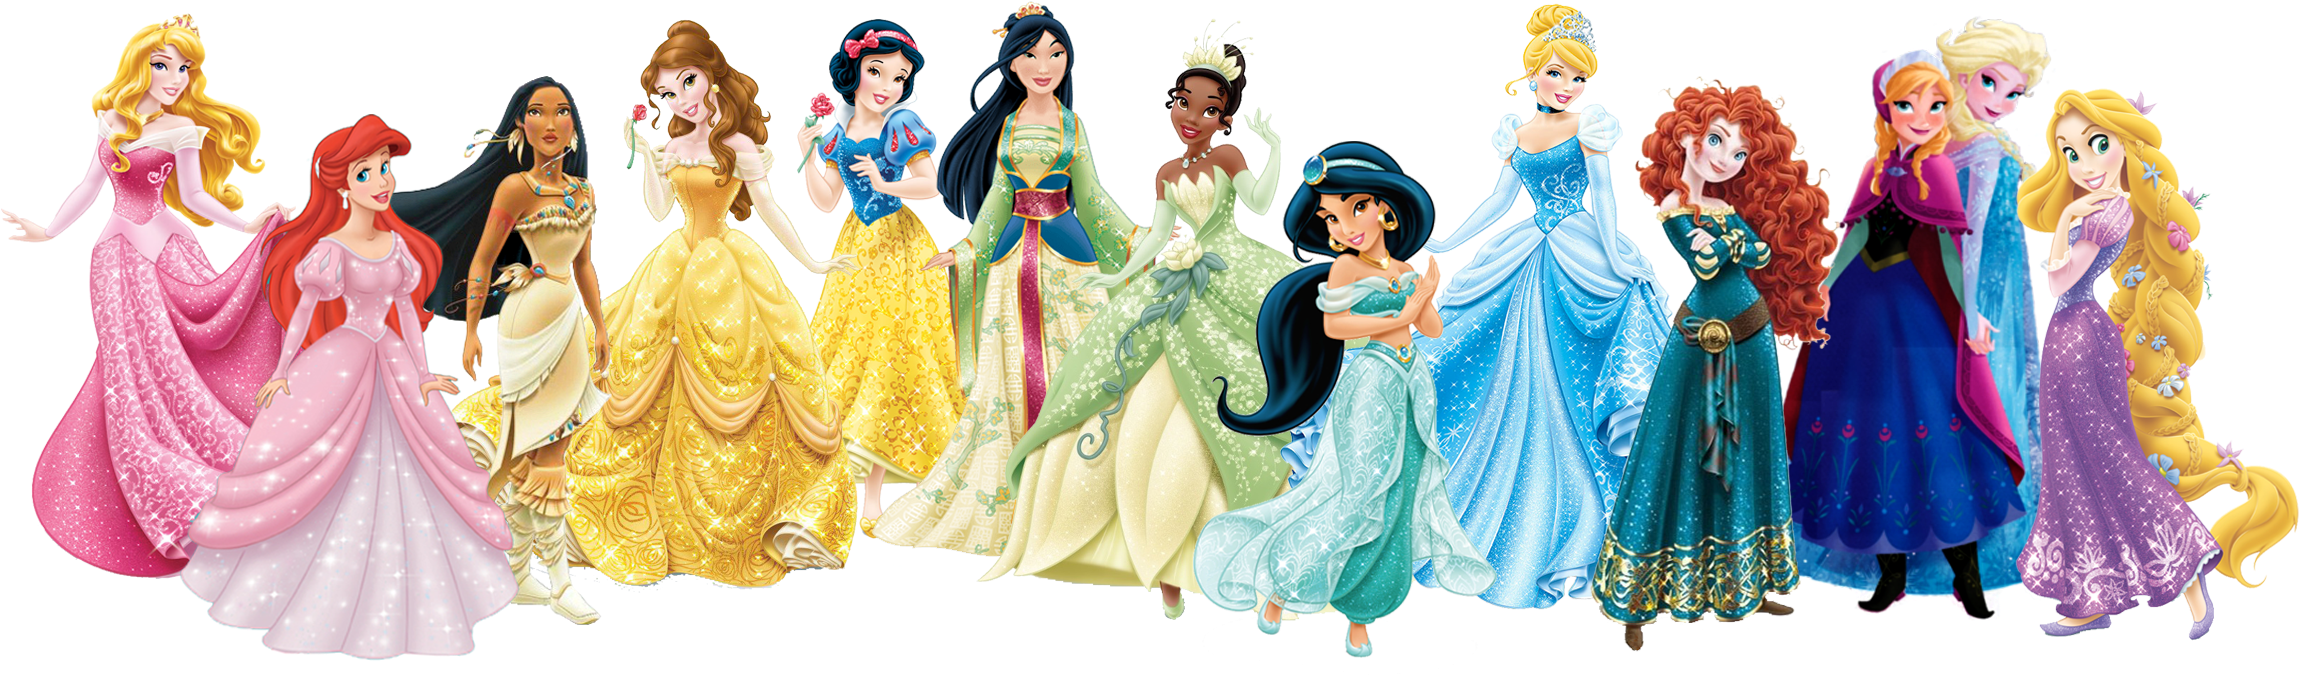 Download Disney Princesses Png Picture - All Disney Princess 2018 PNG